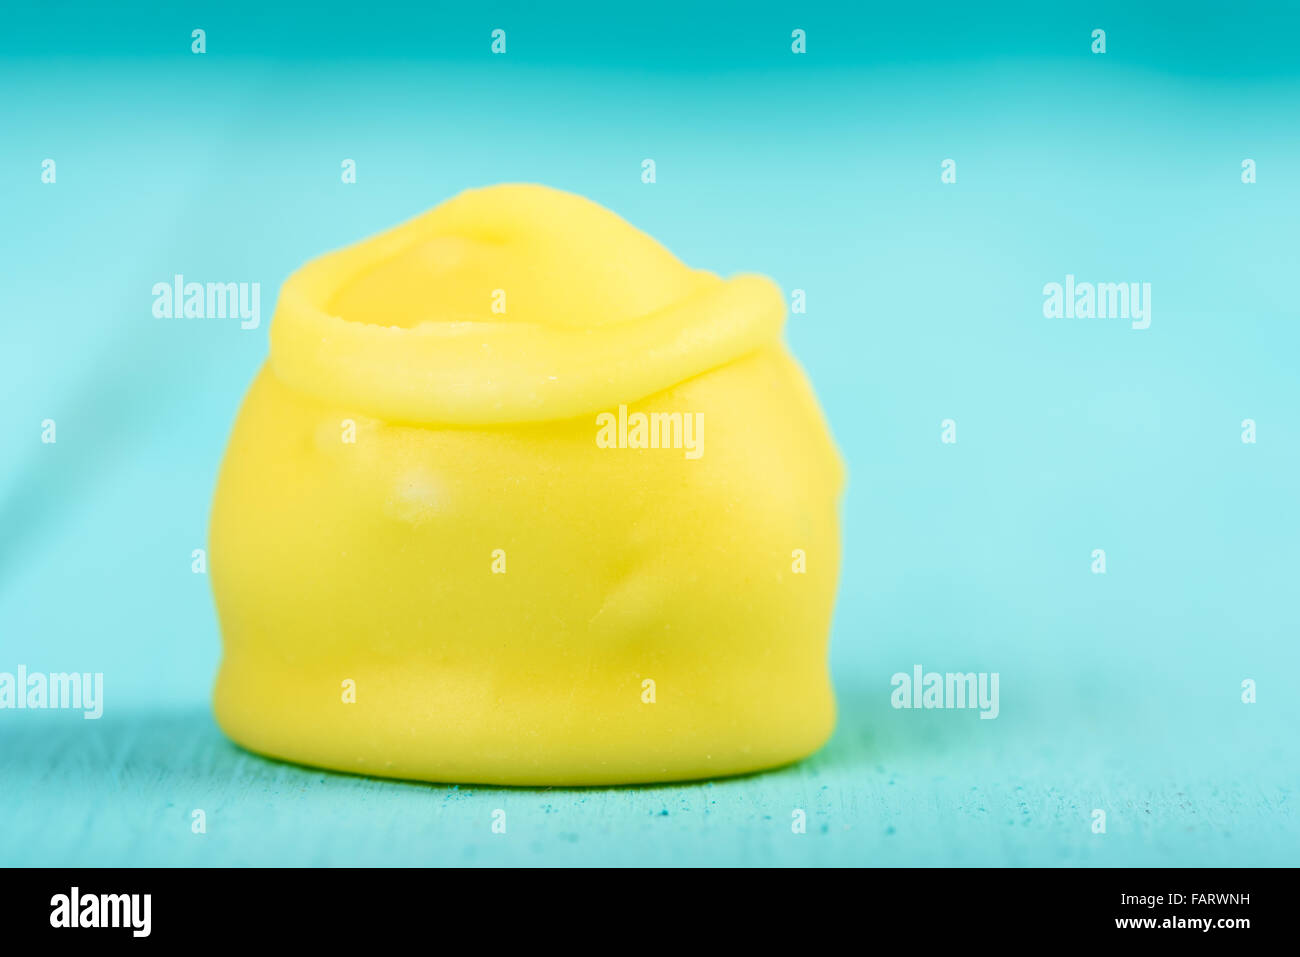 Yellow Fondant Candy On Turquoise Background Stock Photo